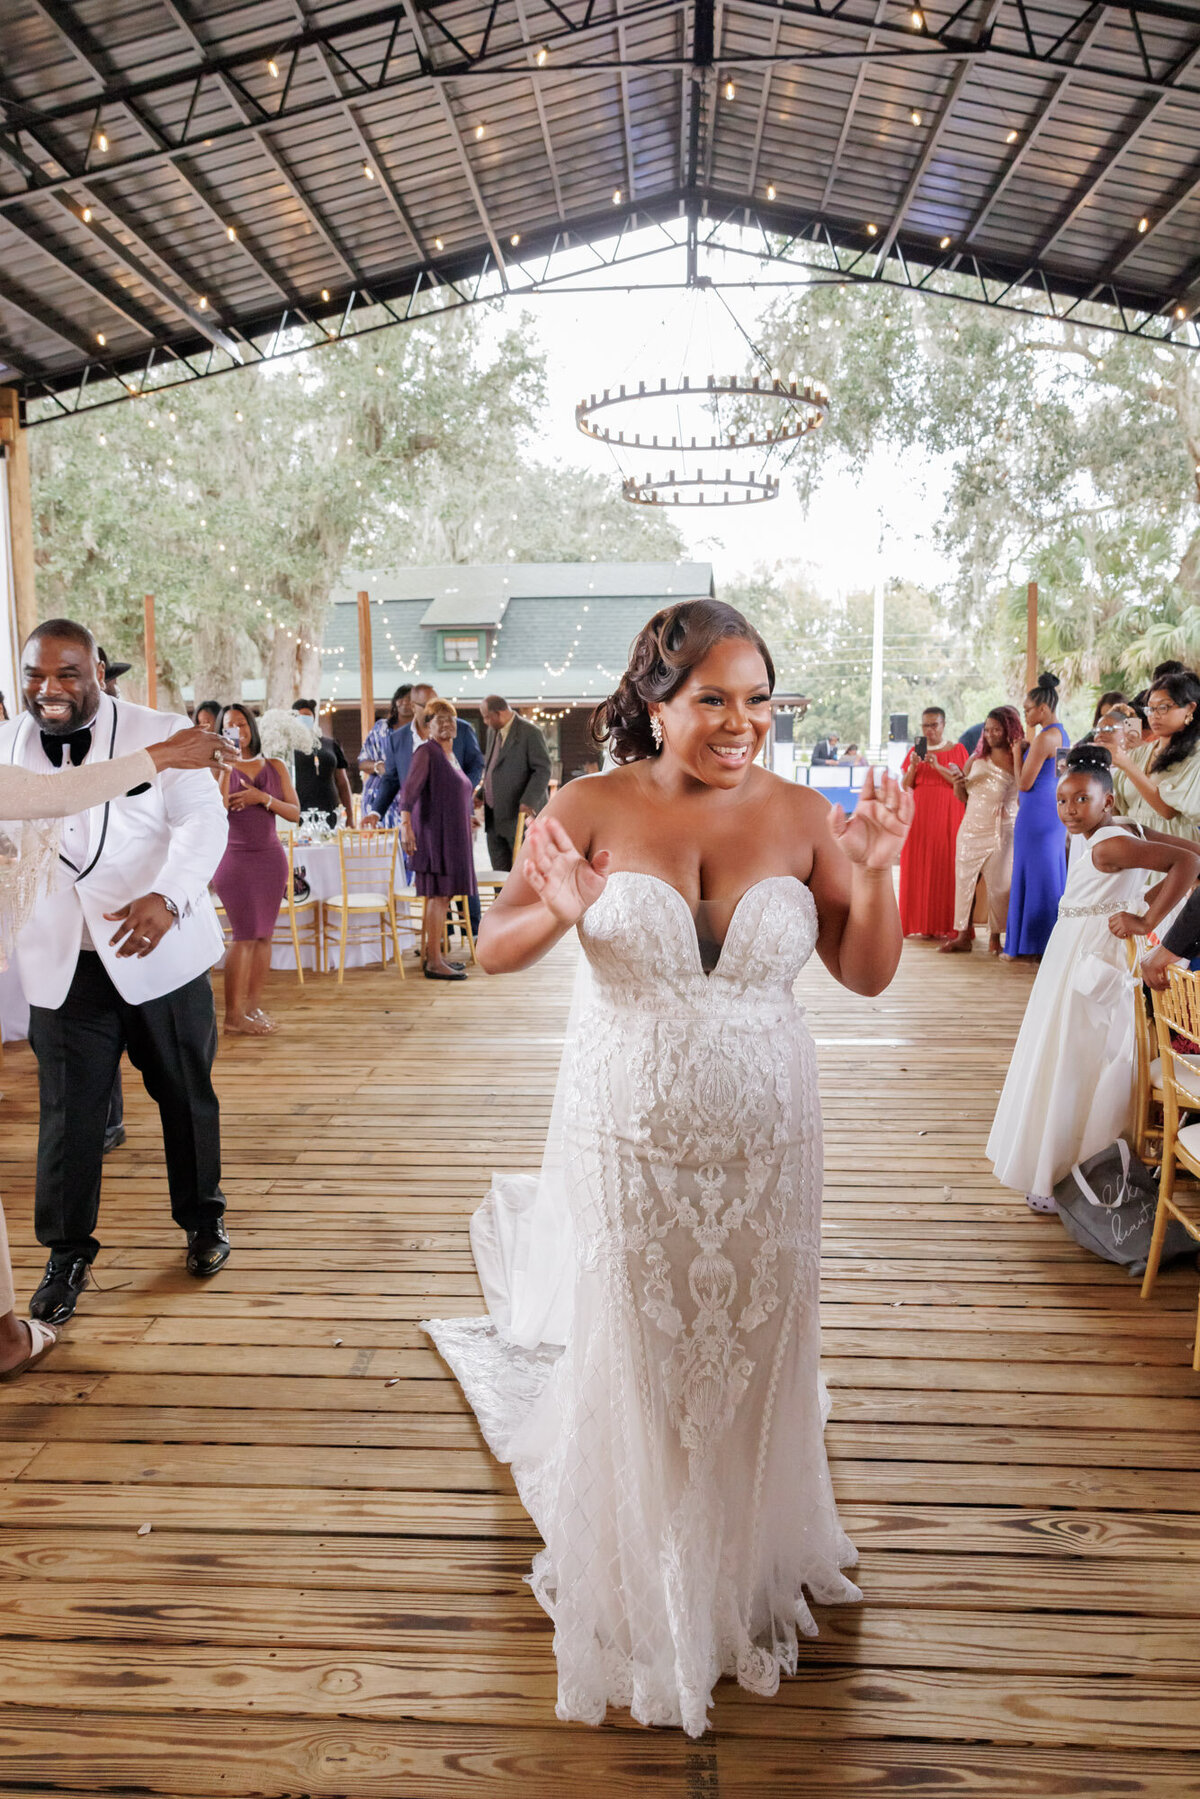 Michael and Mishka-Wedding-Green Cabin Ranch-Astatula, FL-FL Wedding Photographer-Orlando Photographer-Emily Pillon Photography-S-120423-329